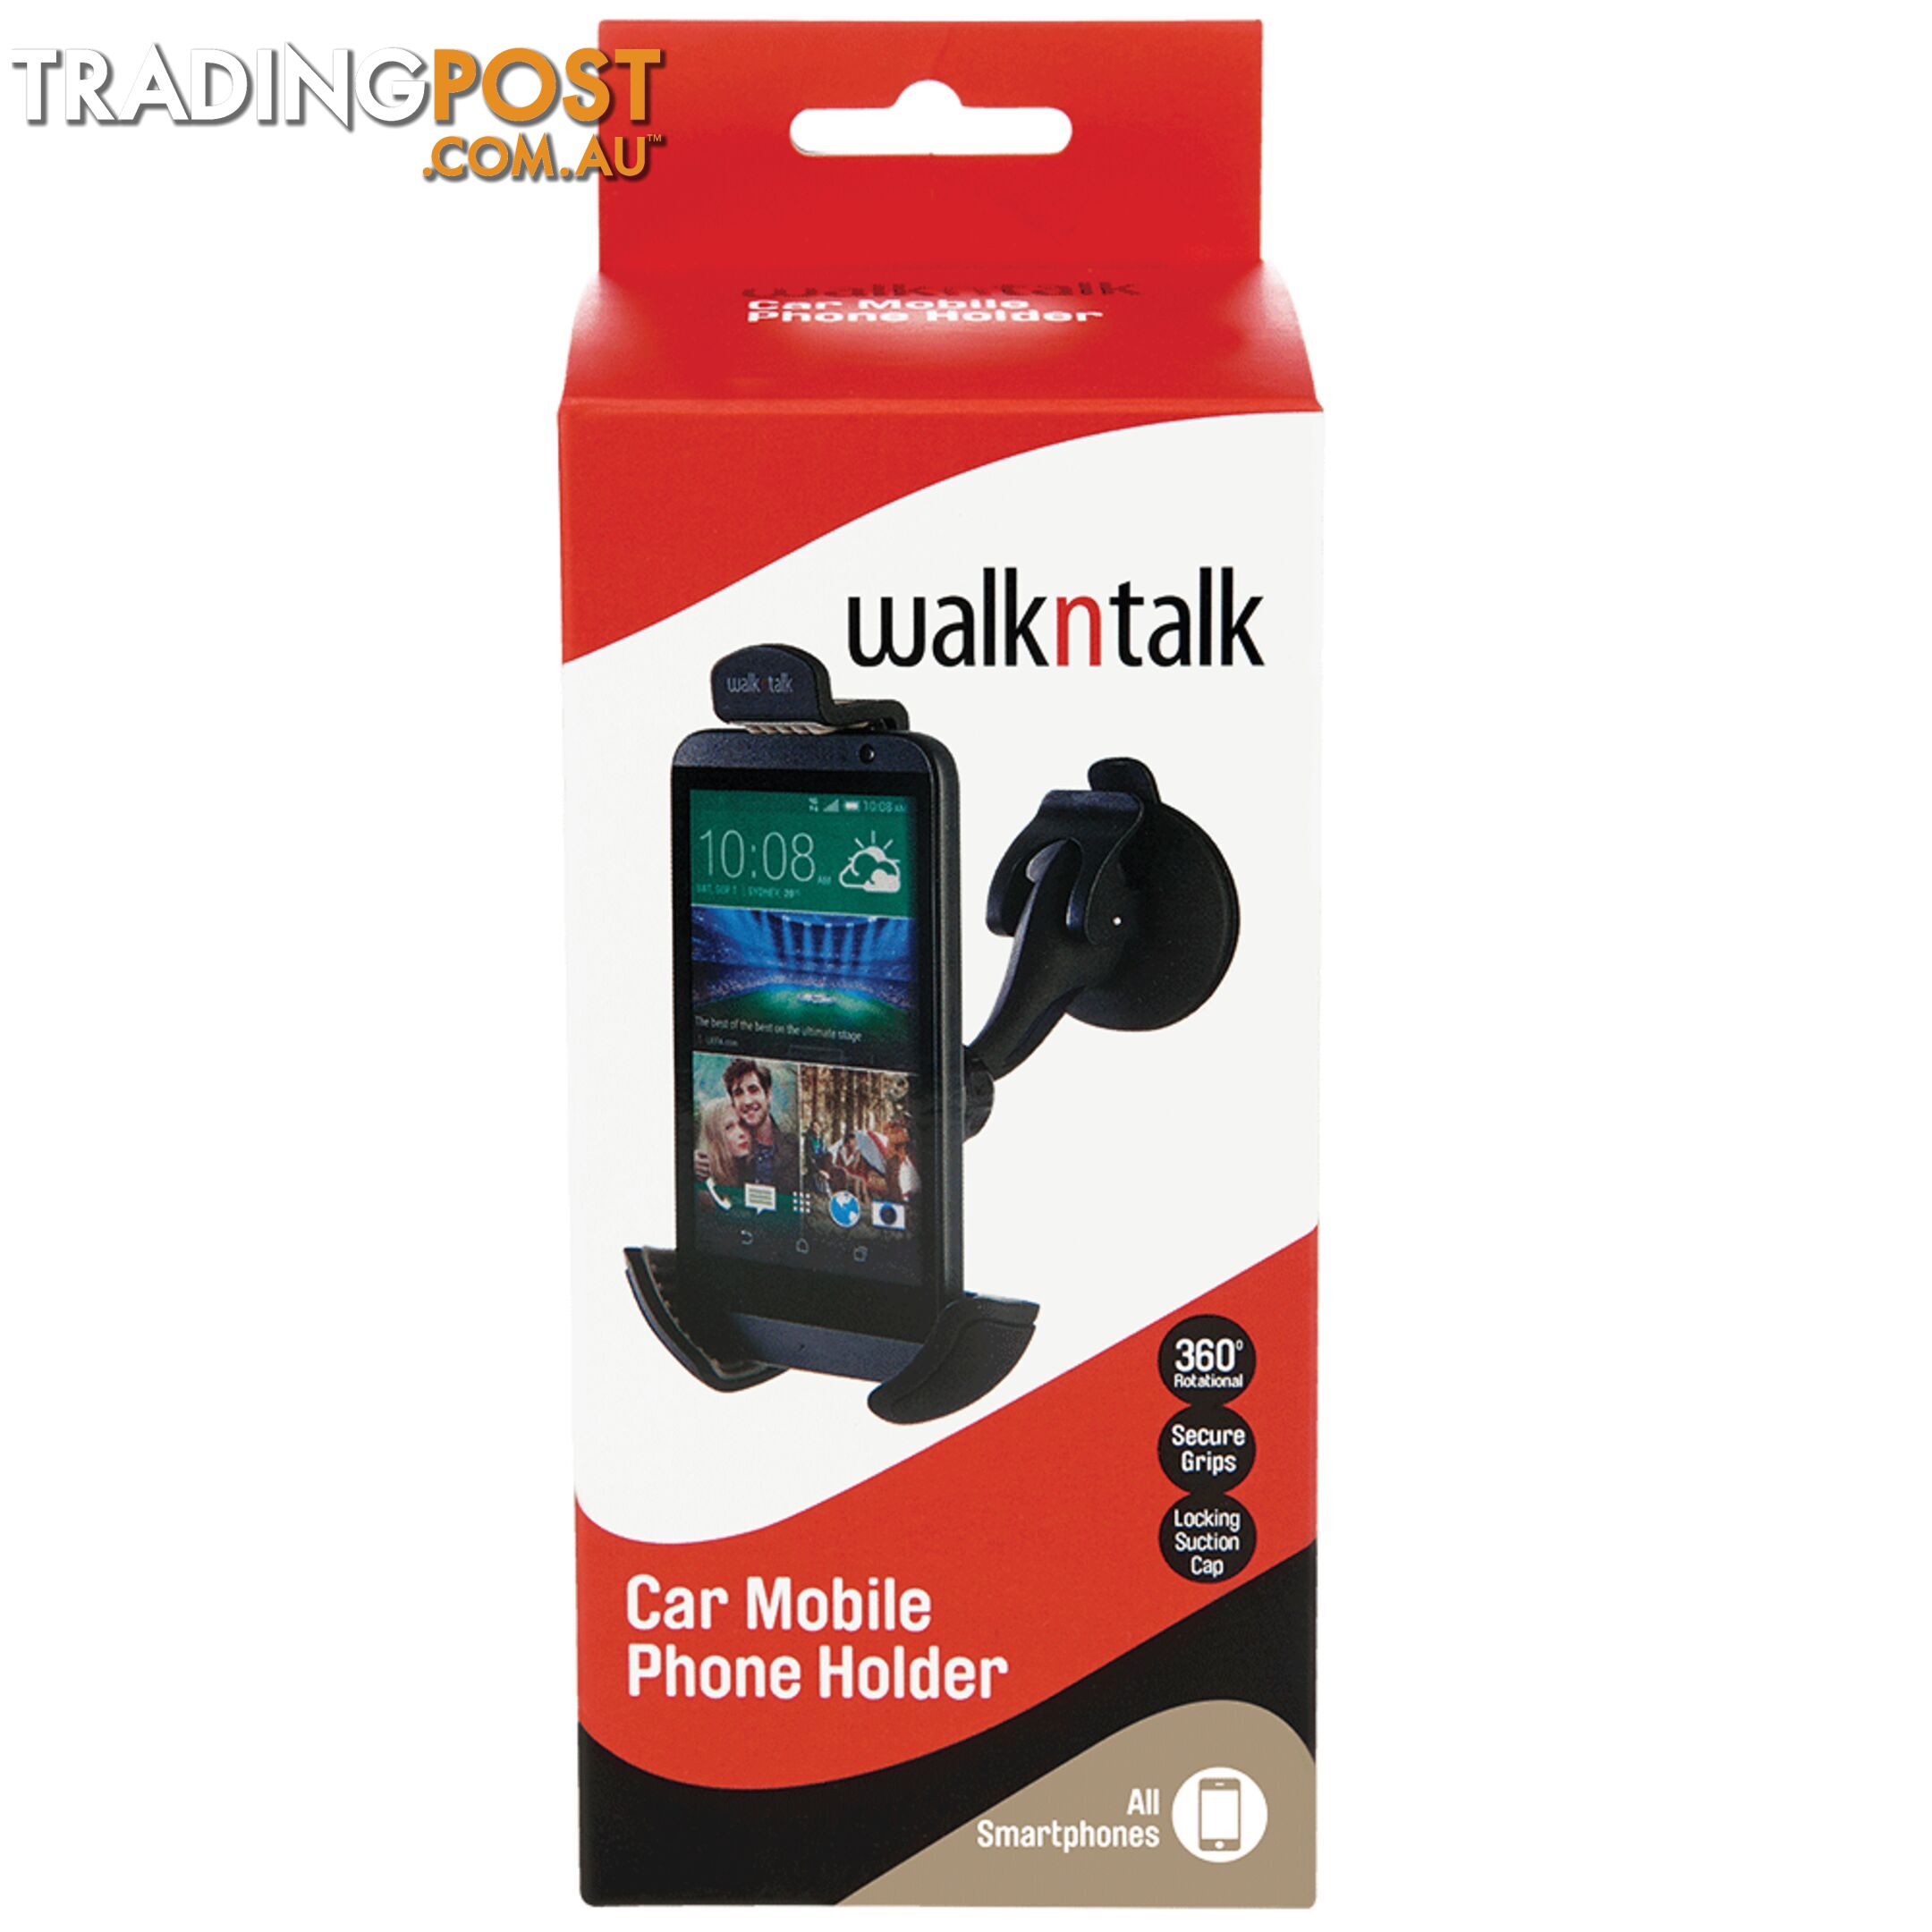 WalknTalk Mobile Phone Holder - 100968 - Car Accessories